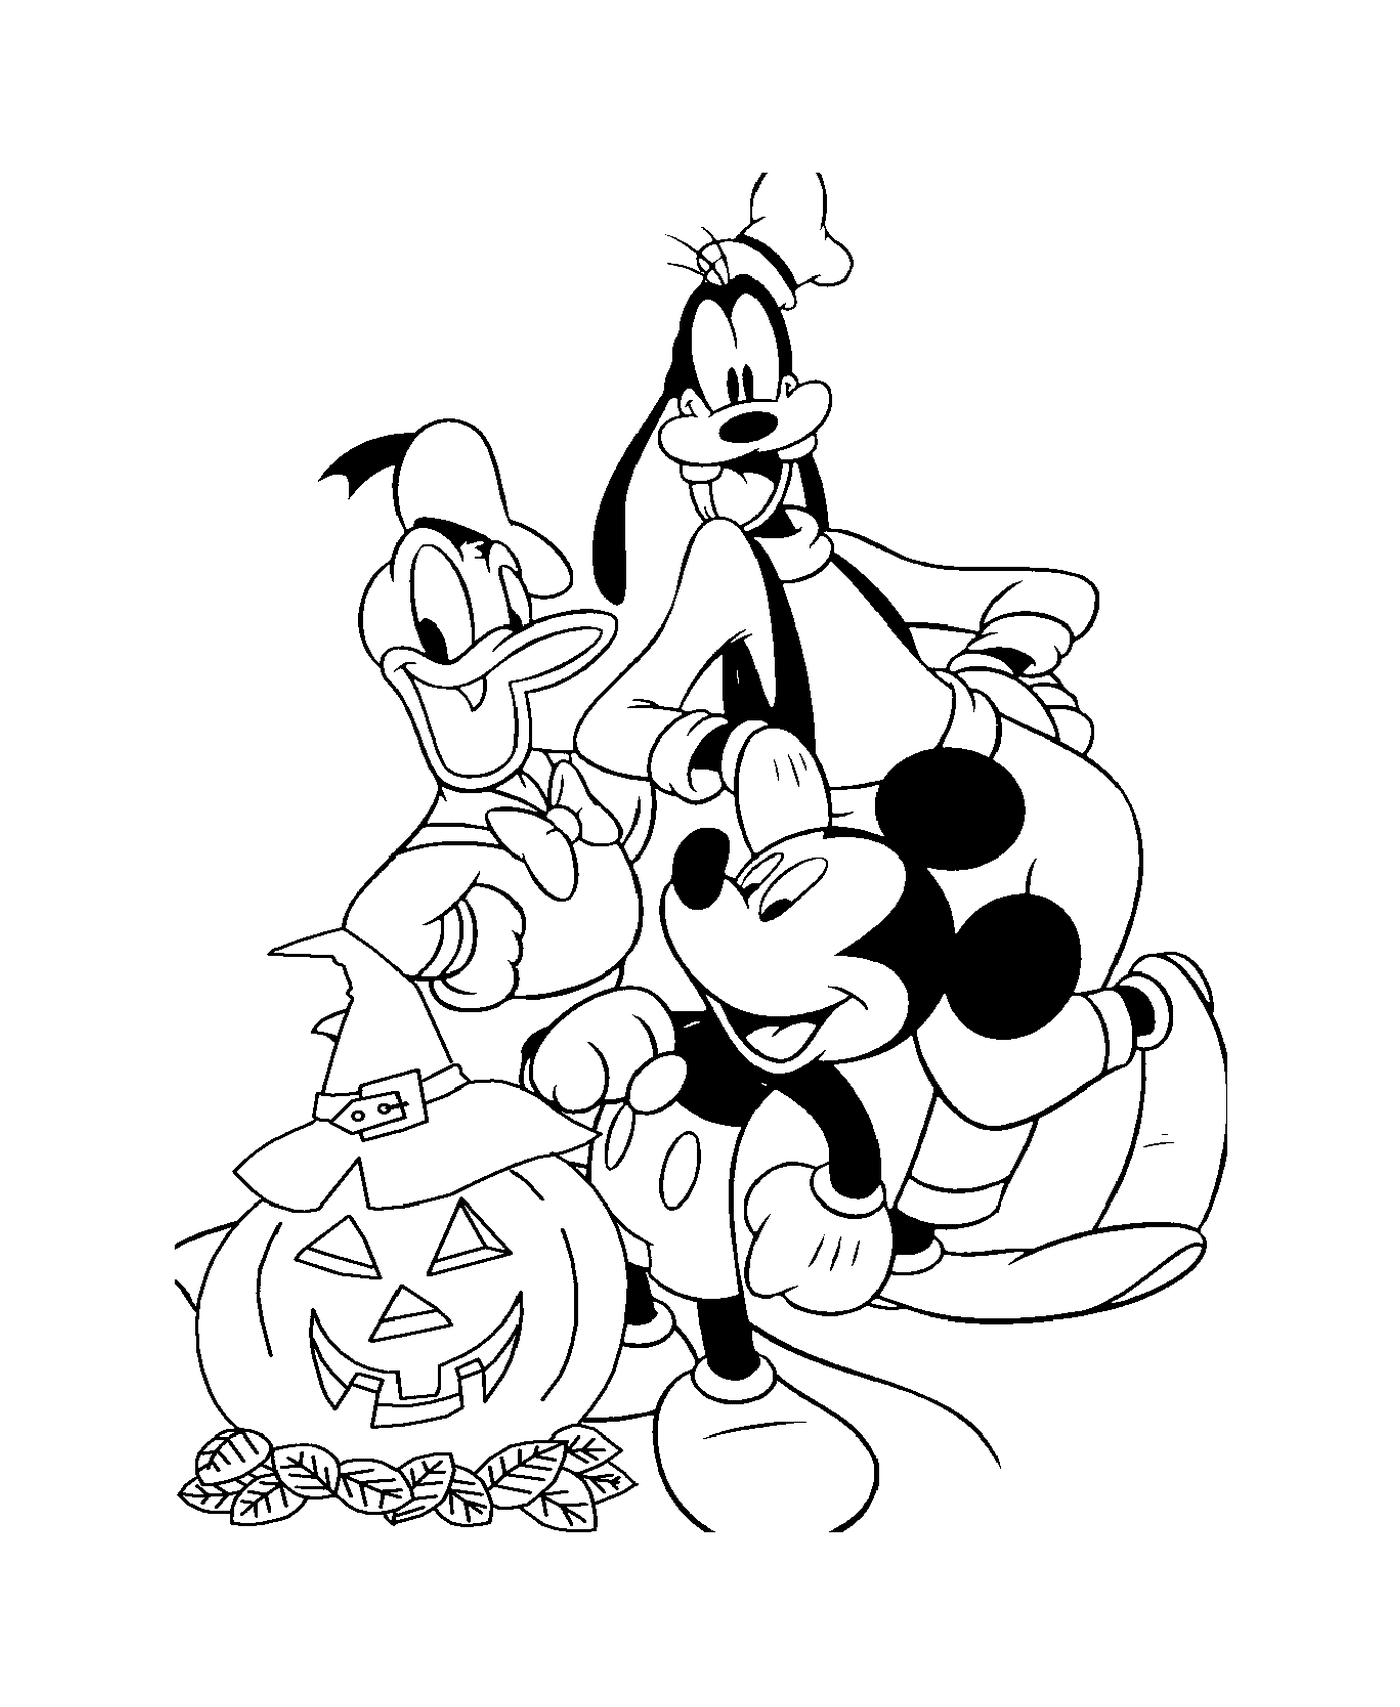  group of cartoon characters around a pumpkin 